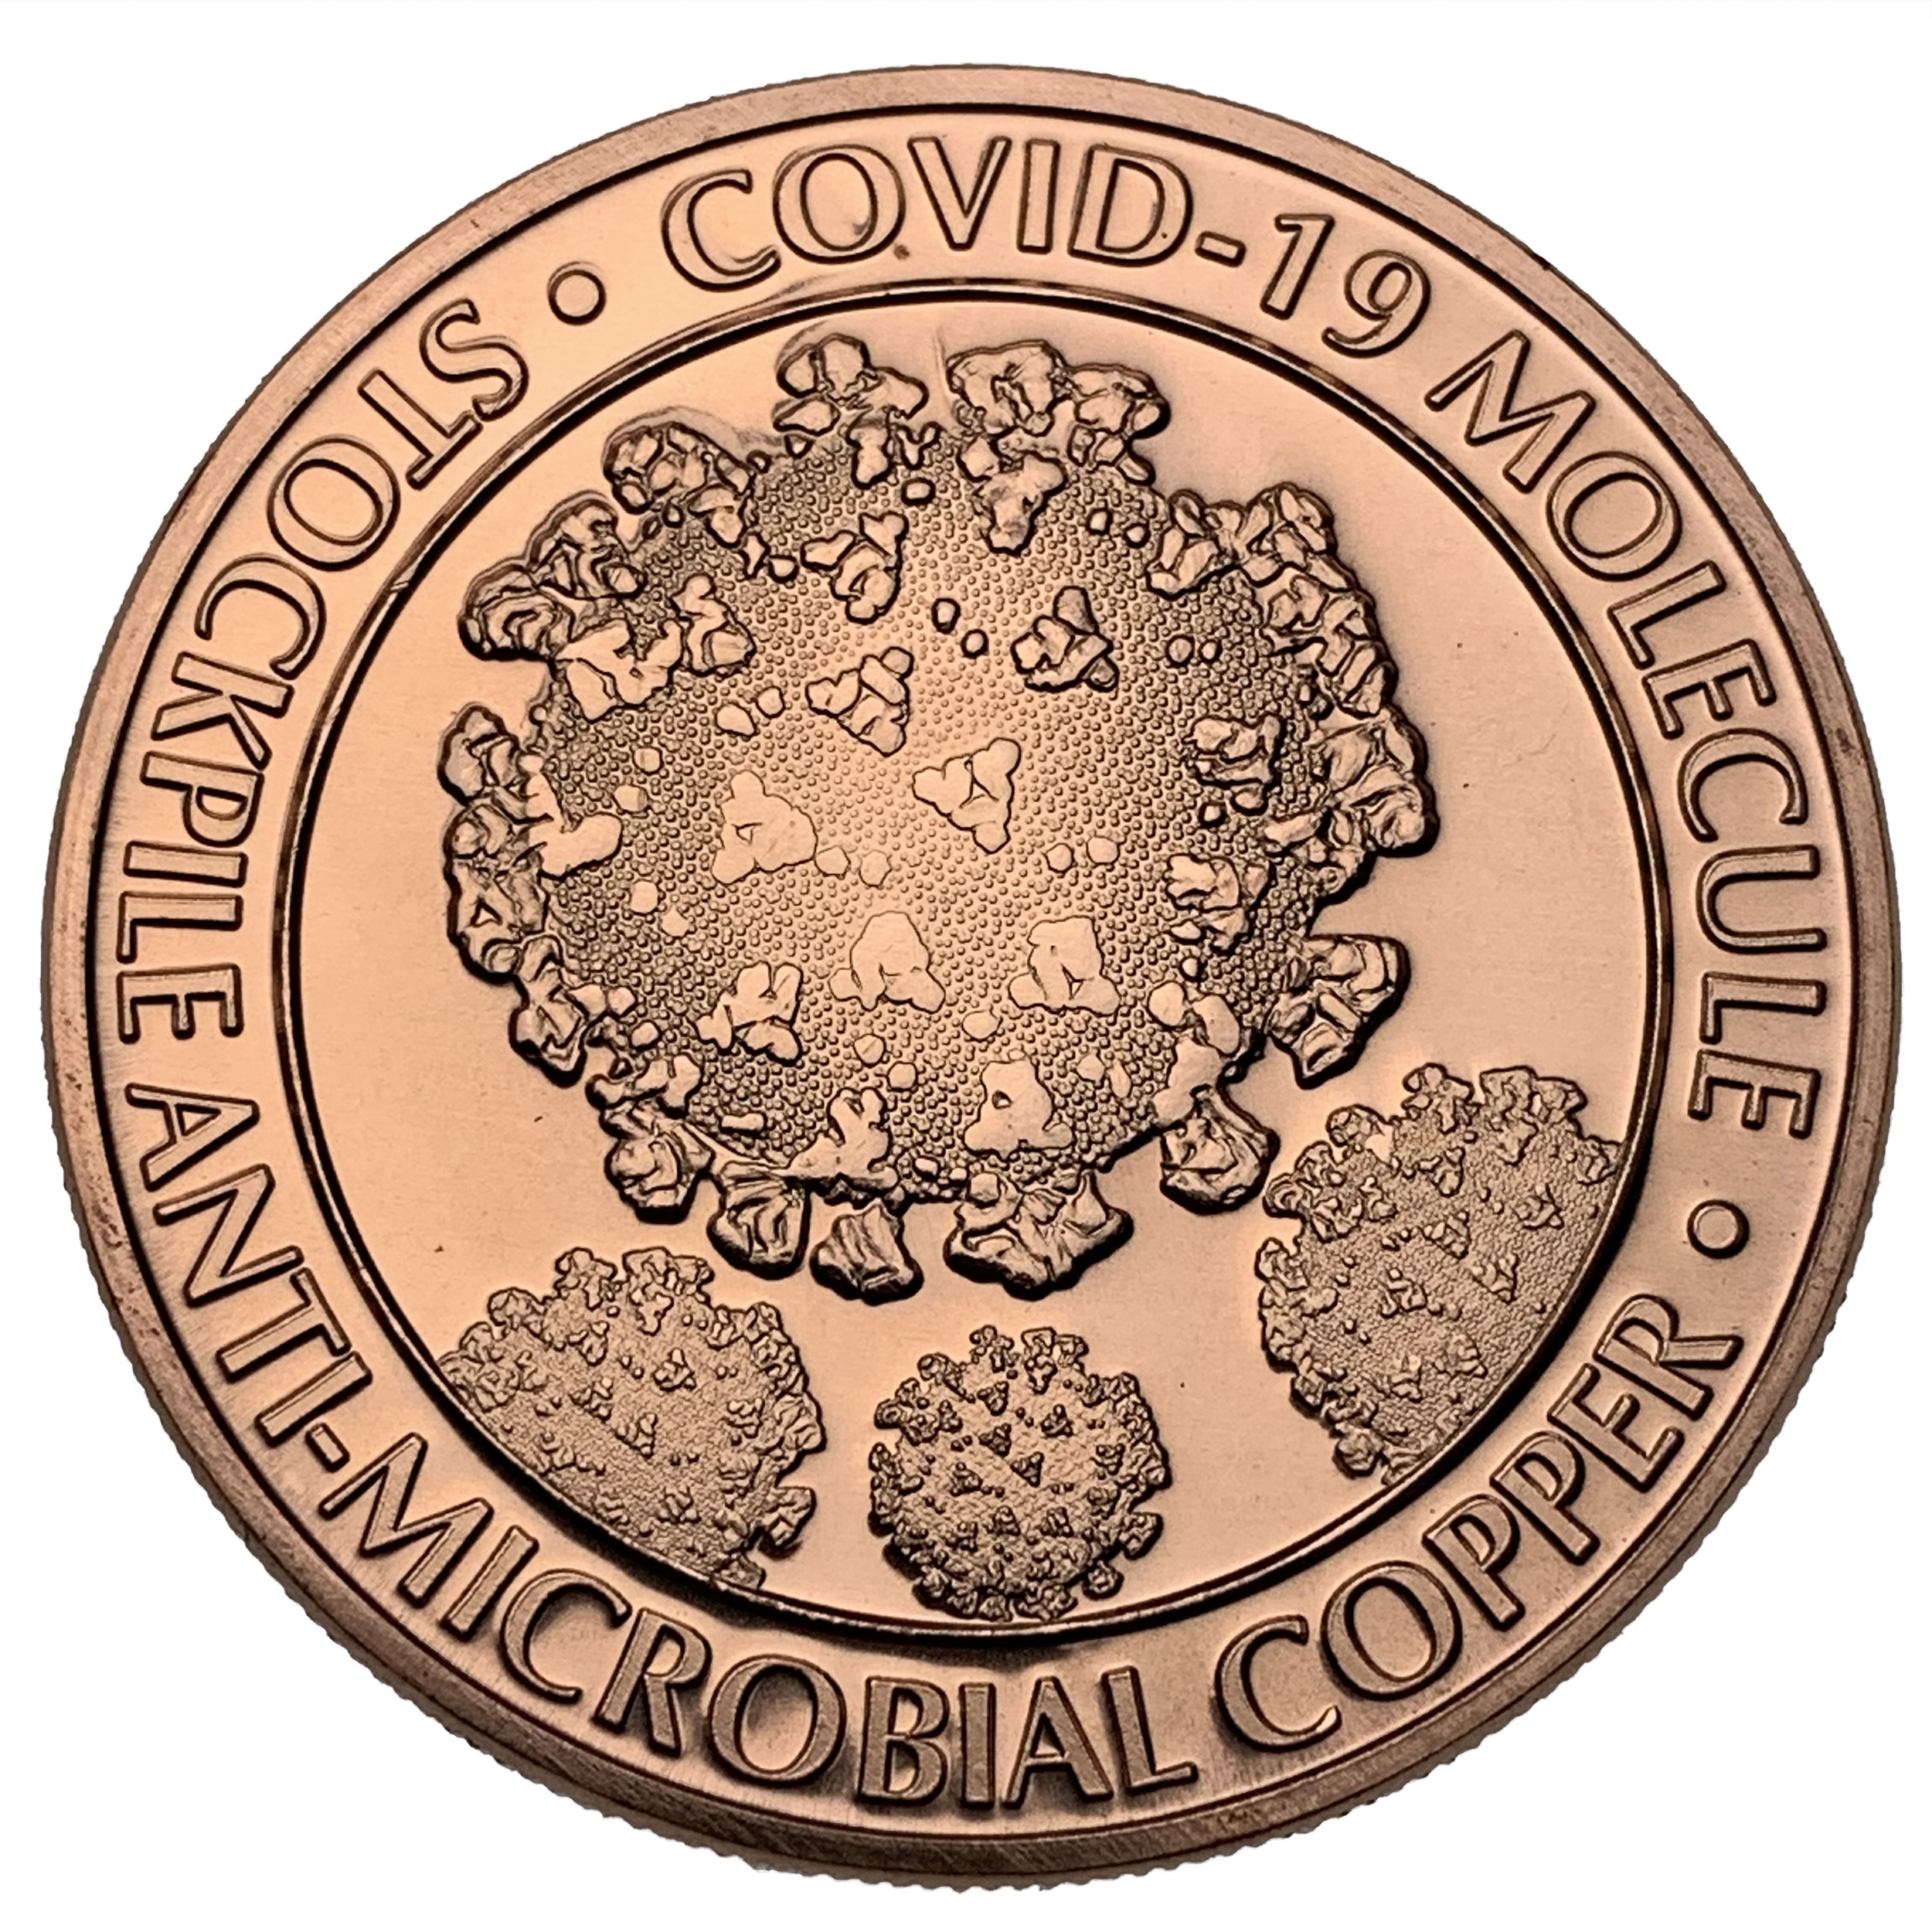 COVID-19 One AVDP Ounce .999 Fine Copper Round Featuring the Coronavirus Molecule